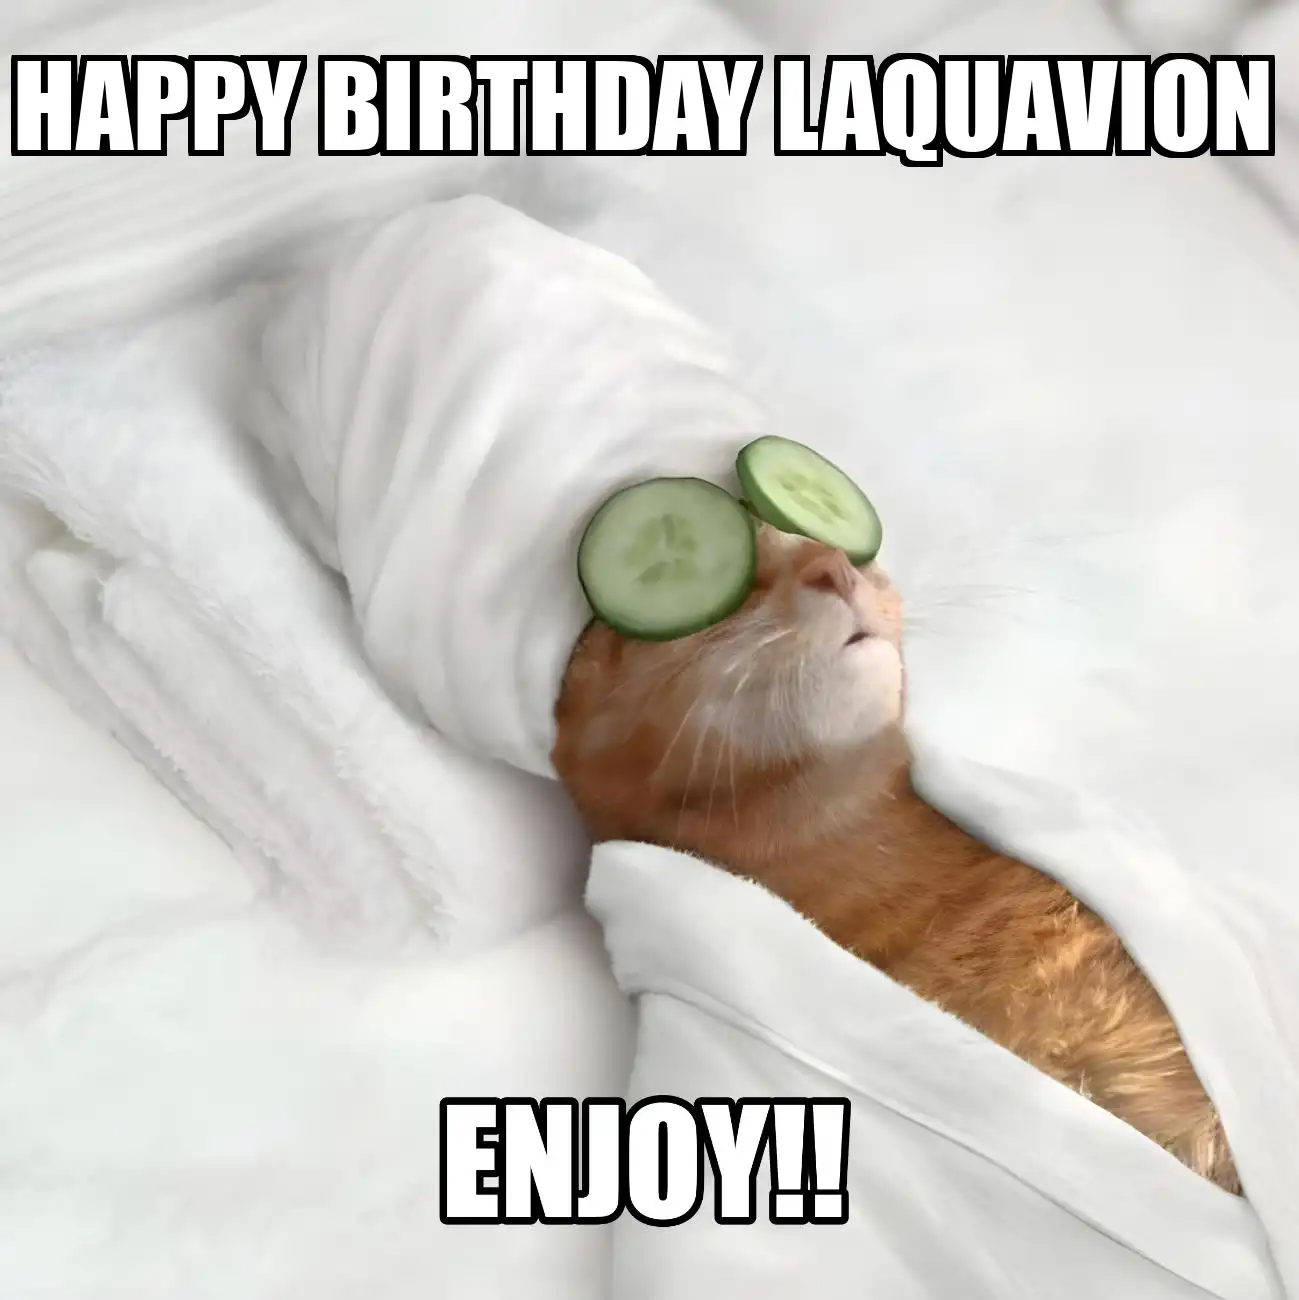 Happy Birthday Laquavion Enjoy Cat Meme